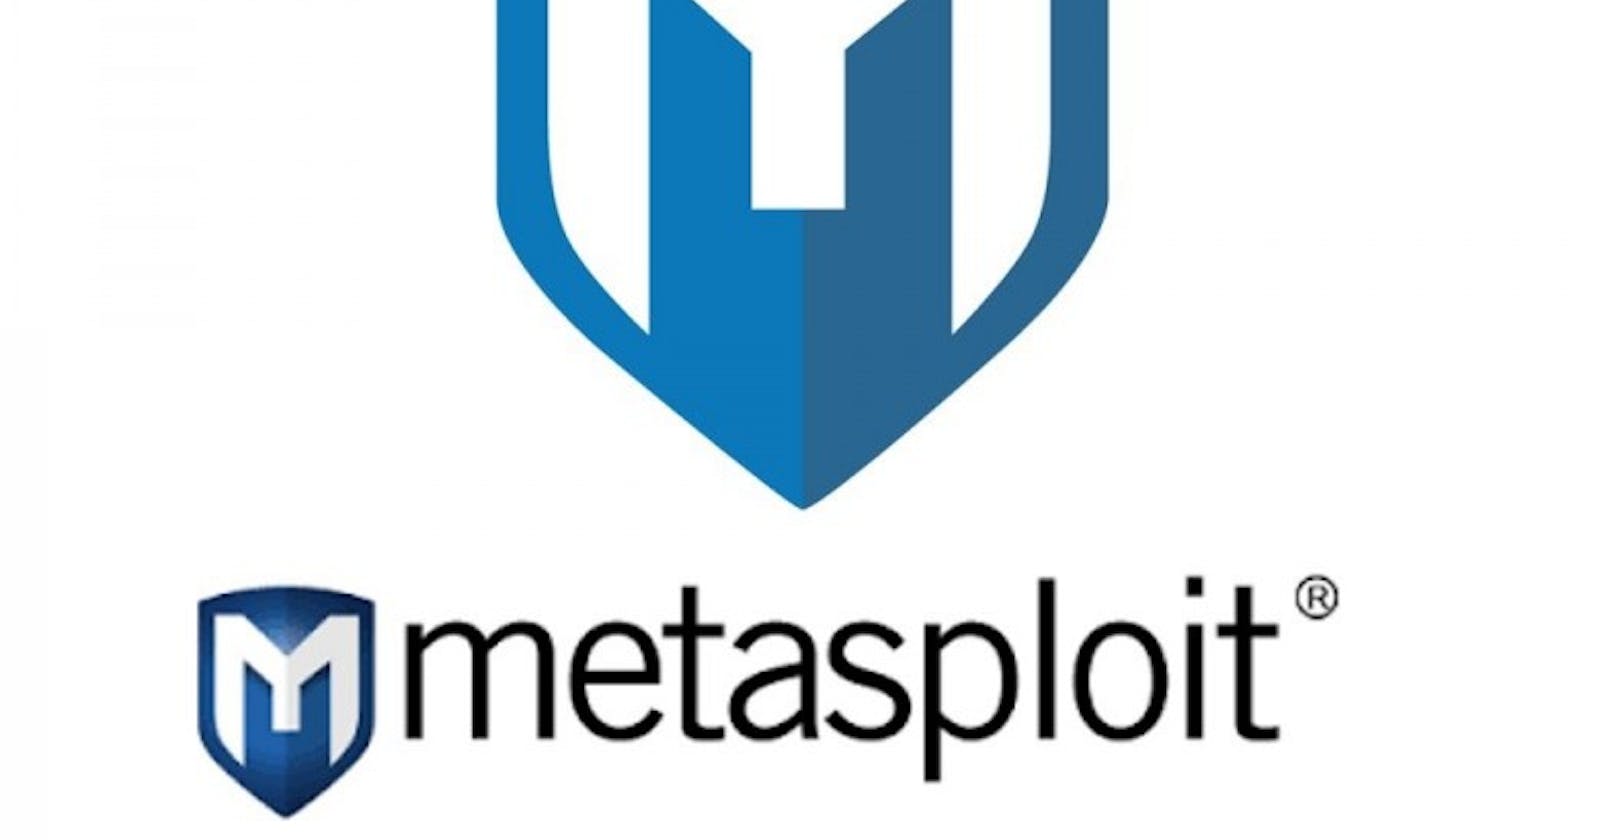 What Is Metasploit?